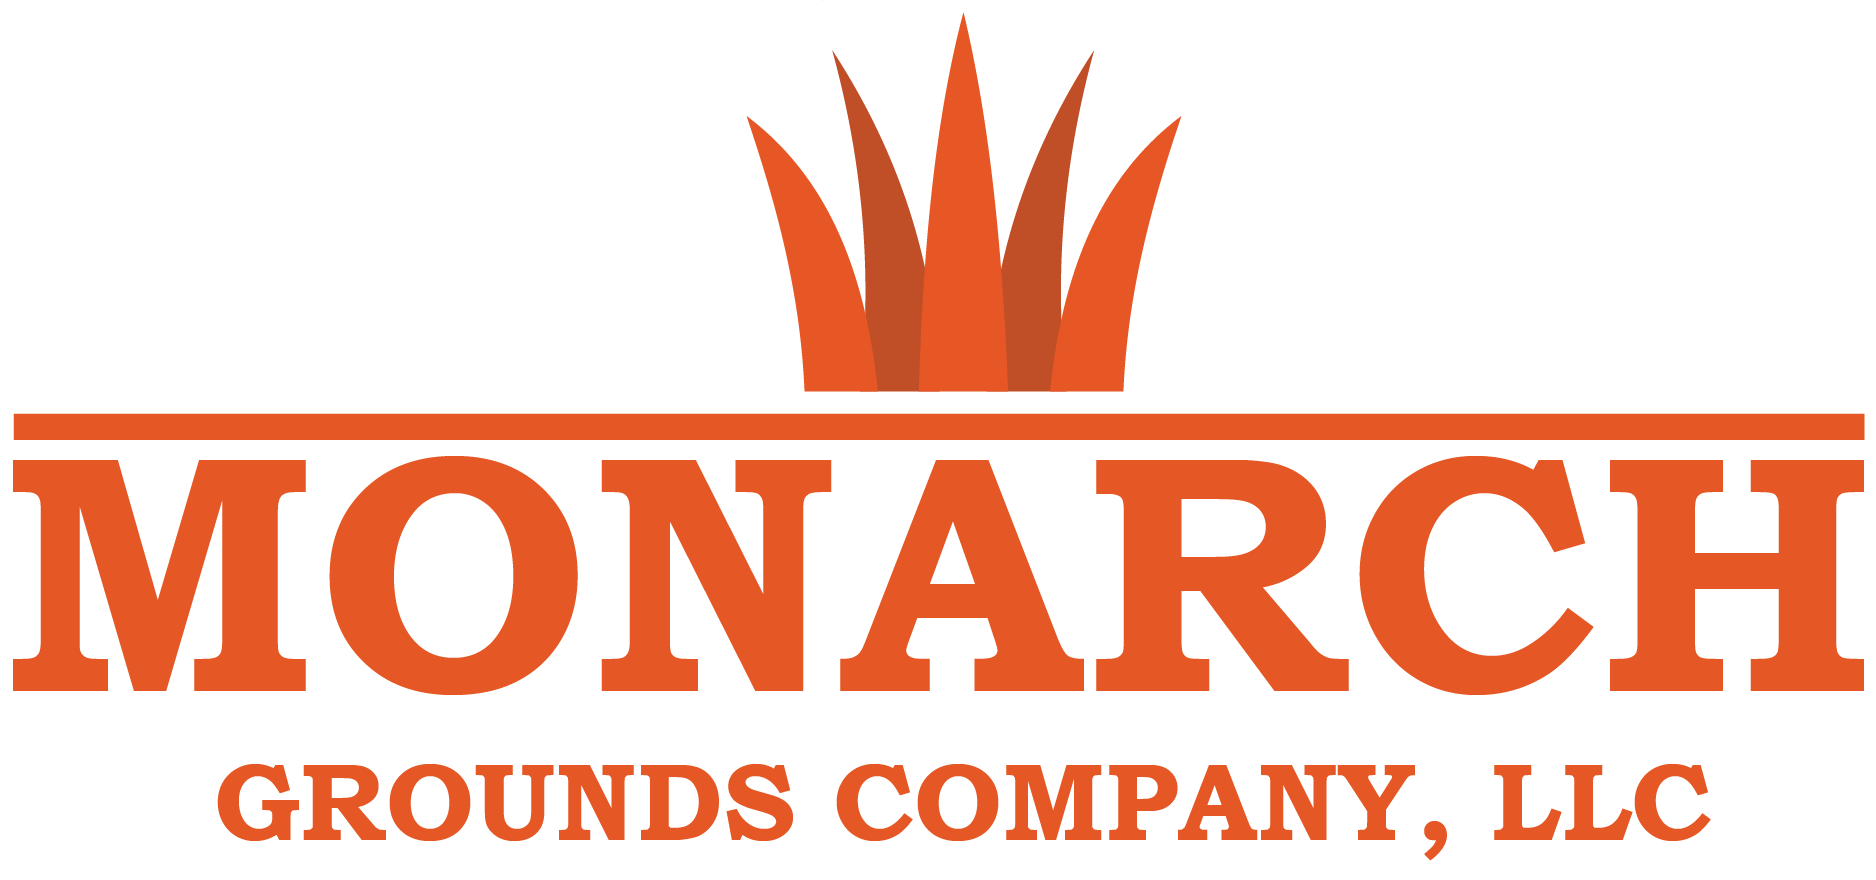 Monarch Grounds Company, LLC Logo